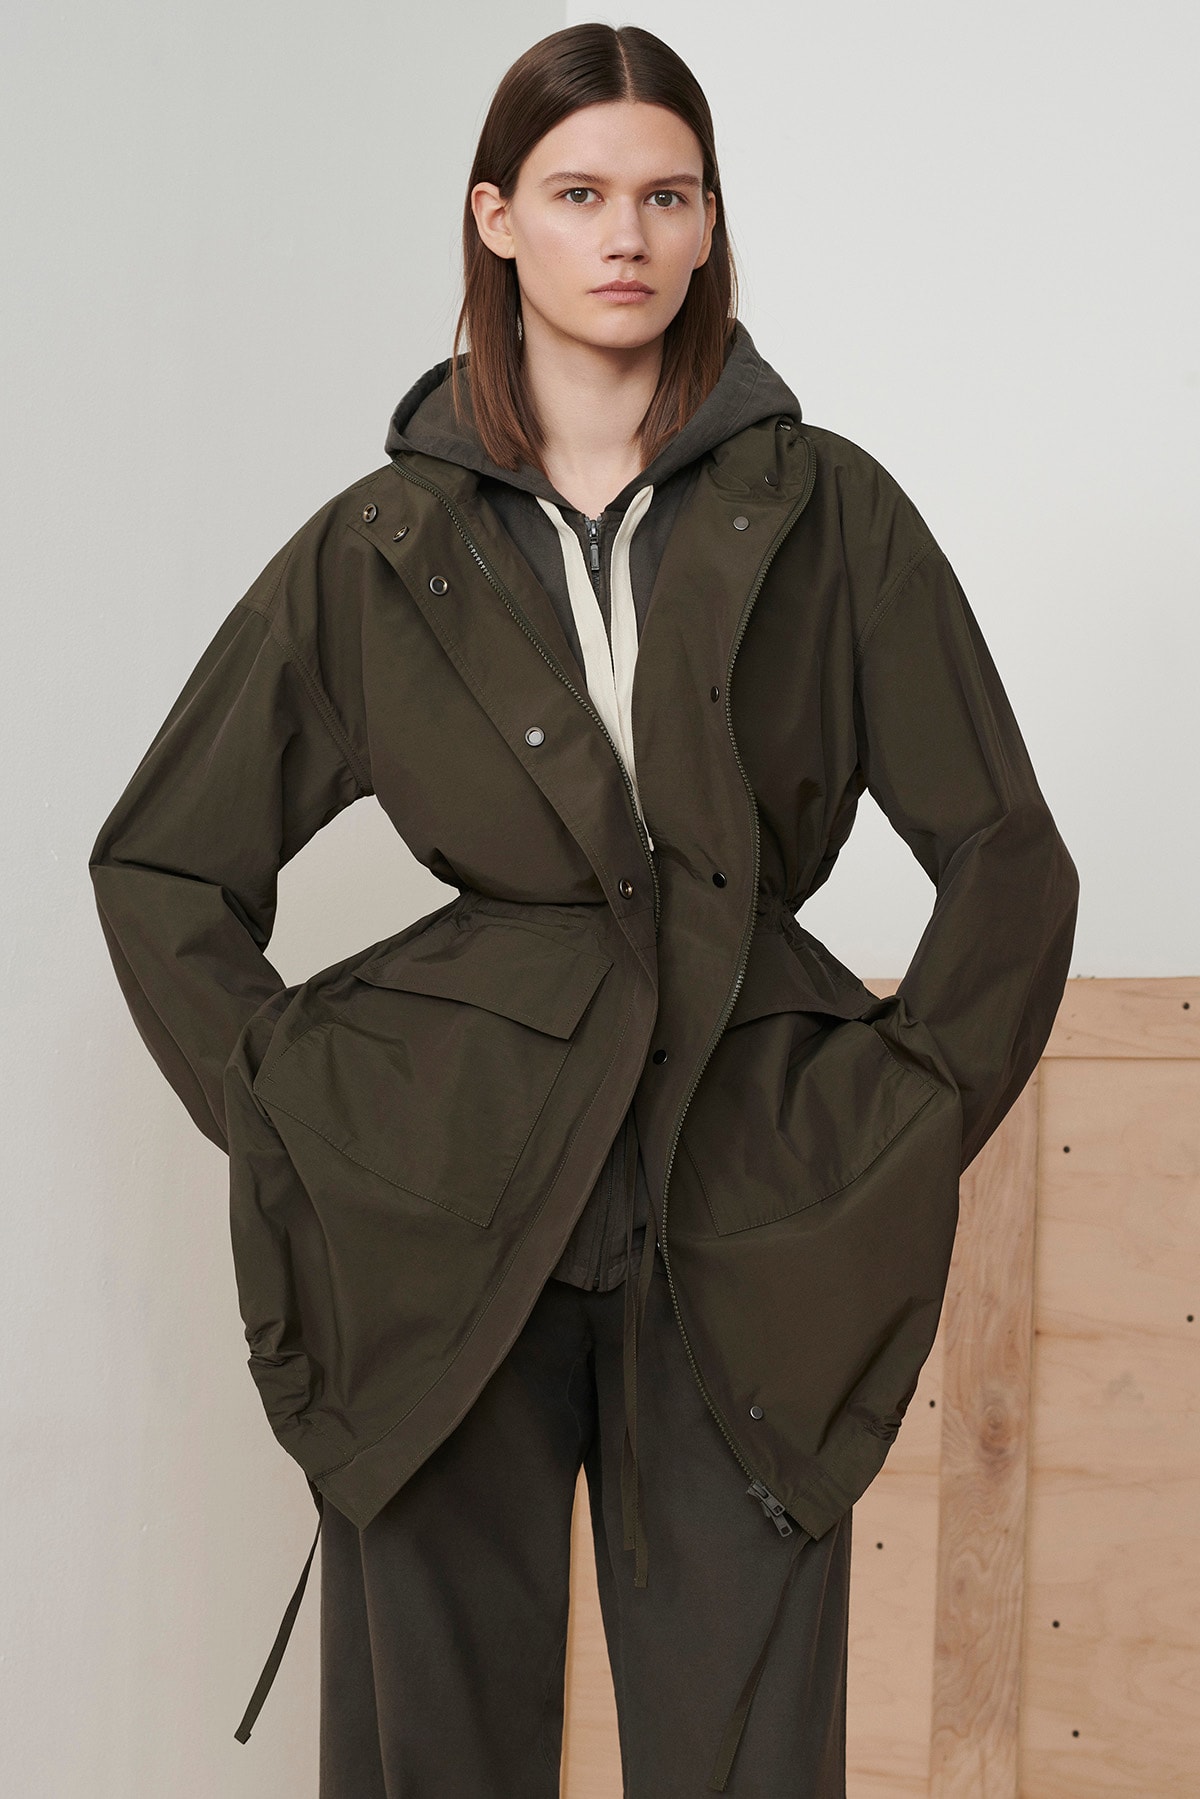 Eileen Fisher x Nordstrom Olivia Kim Sustainable Collection Fishtail Anorak Cotton Jumpsuit